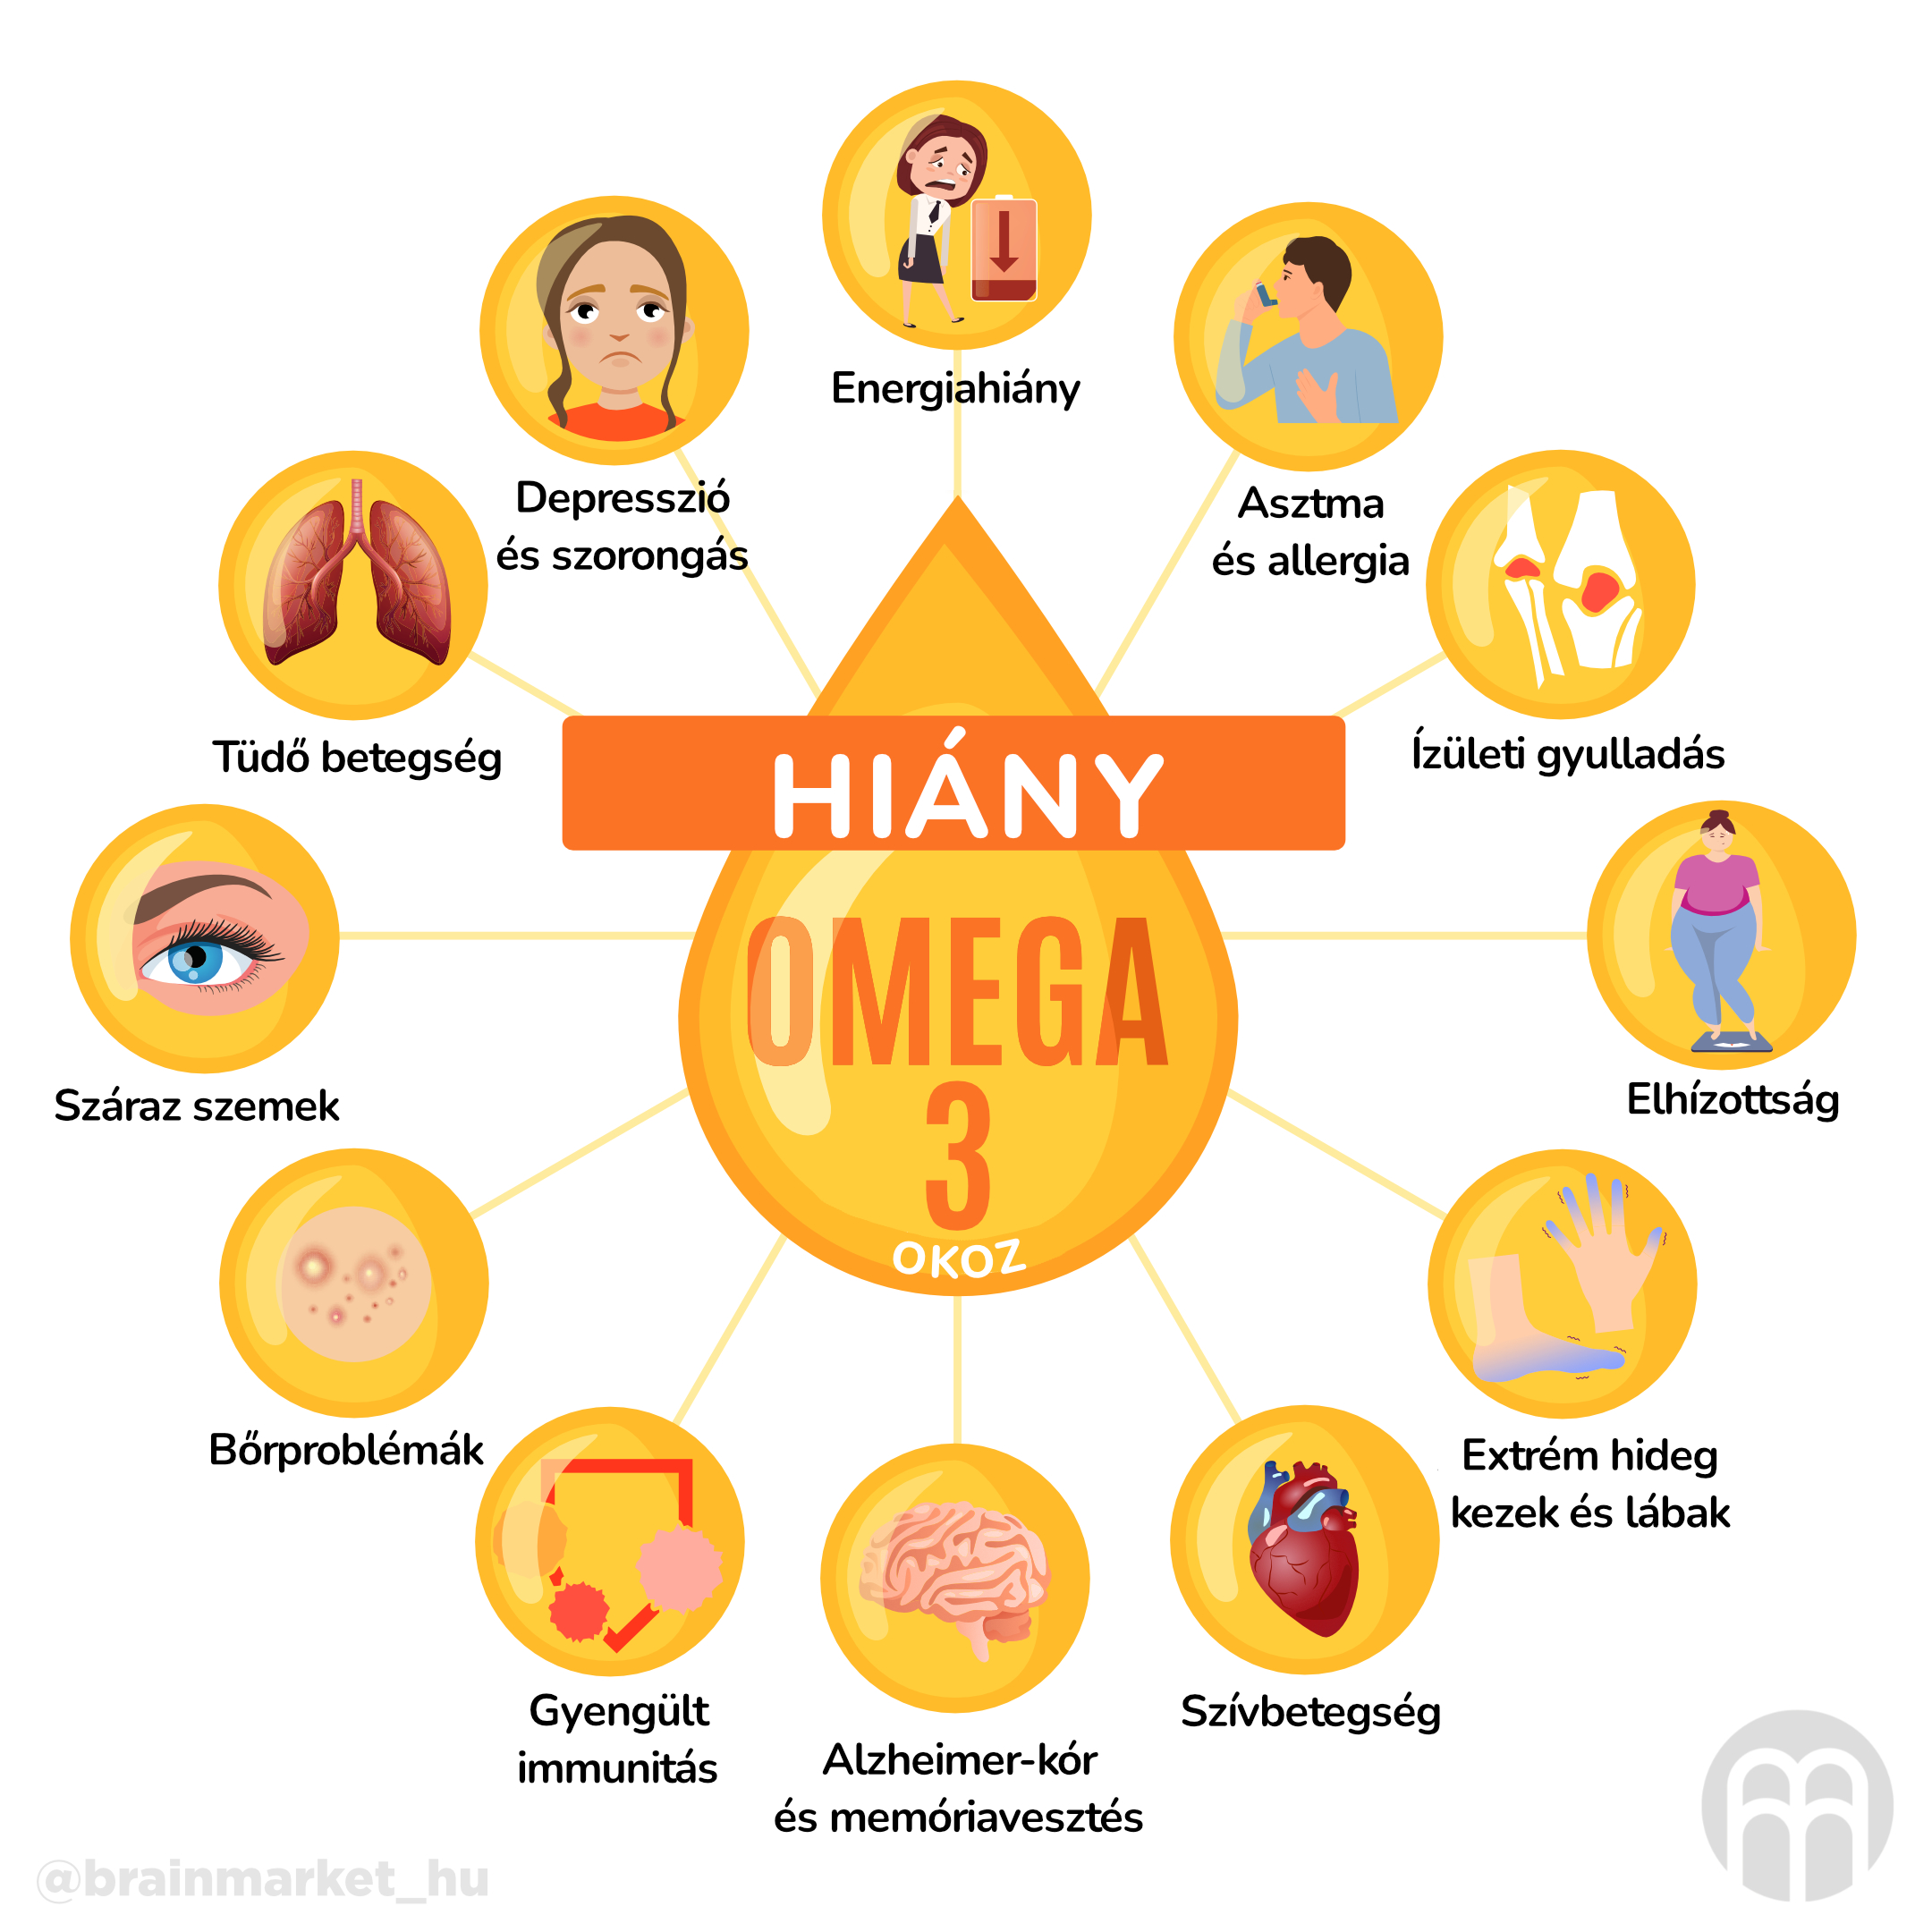 nedostatek omega3 zpusobuje_infografika_hu